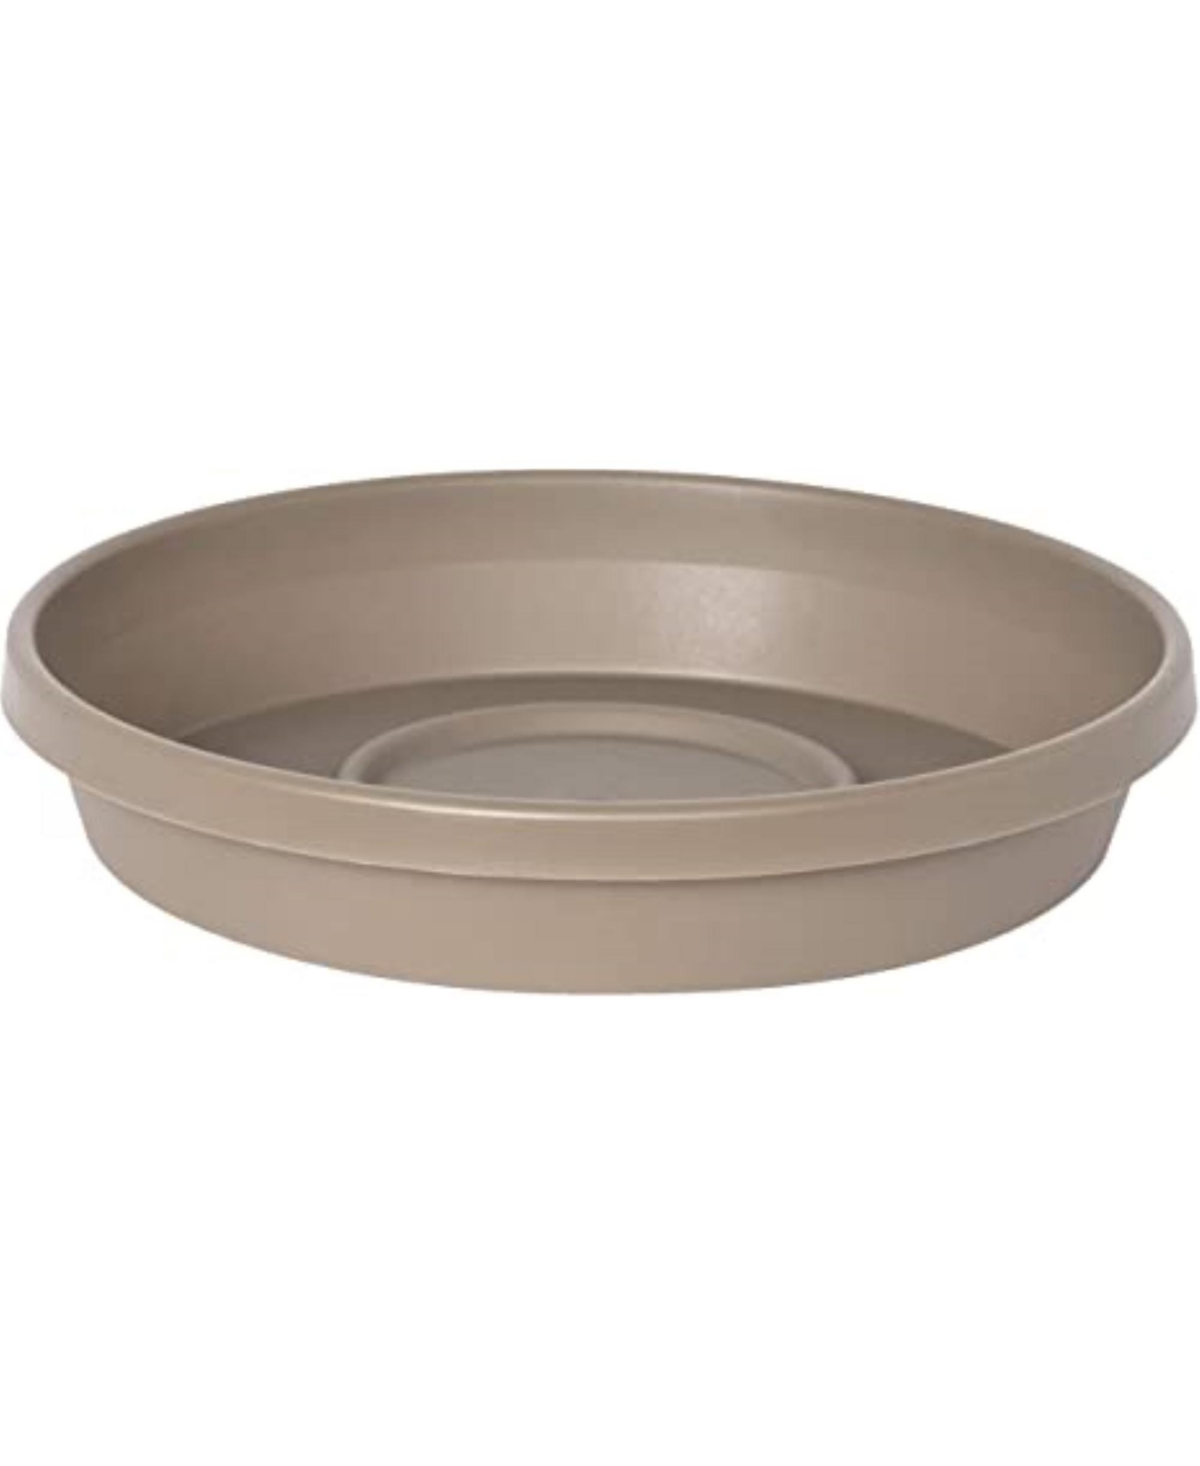 Terra Round Plastic Saucer, Stone Grey, 12in - Gray